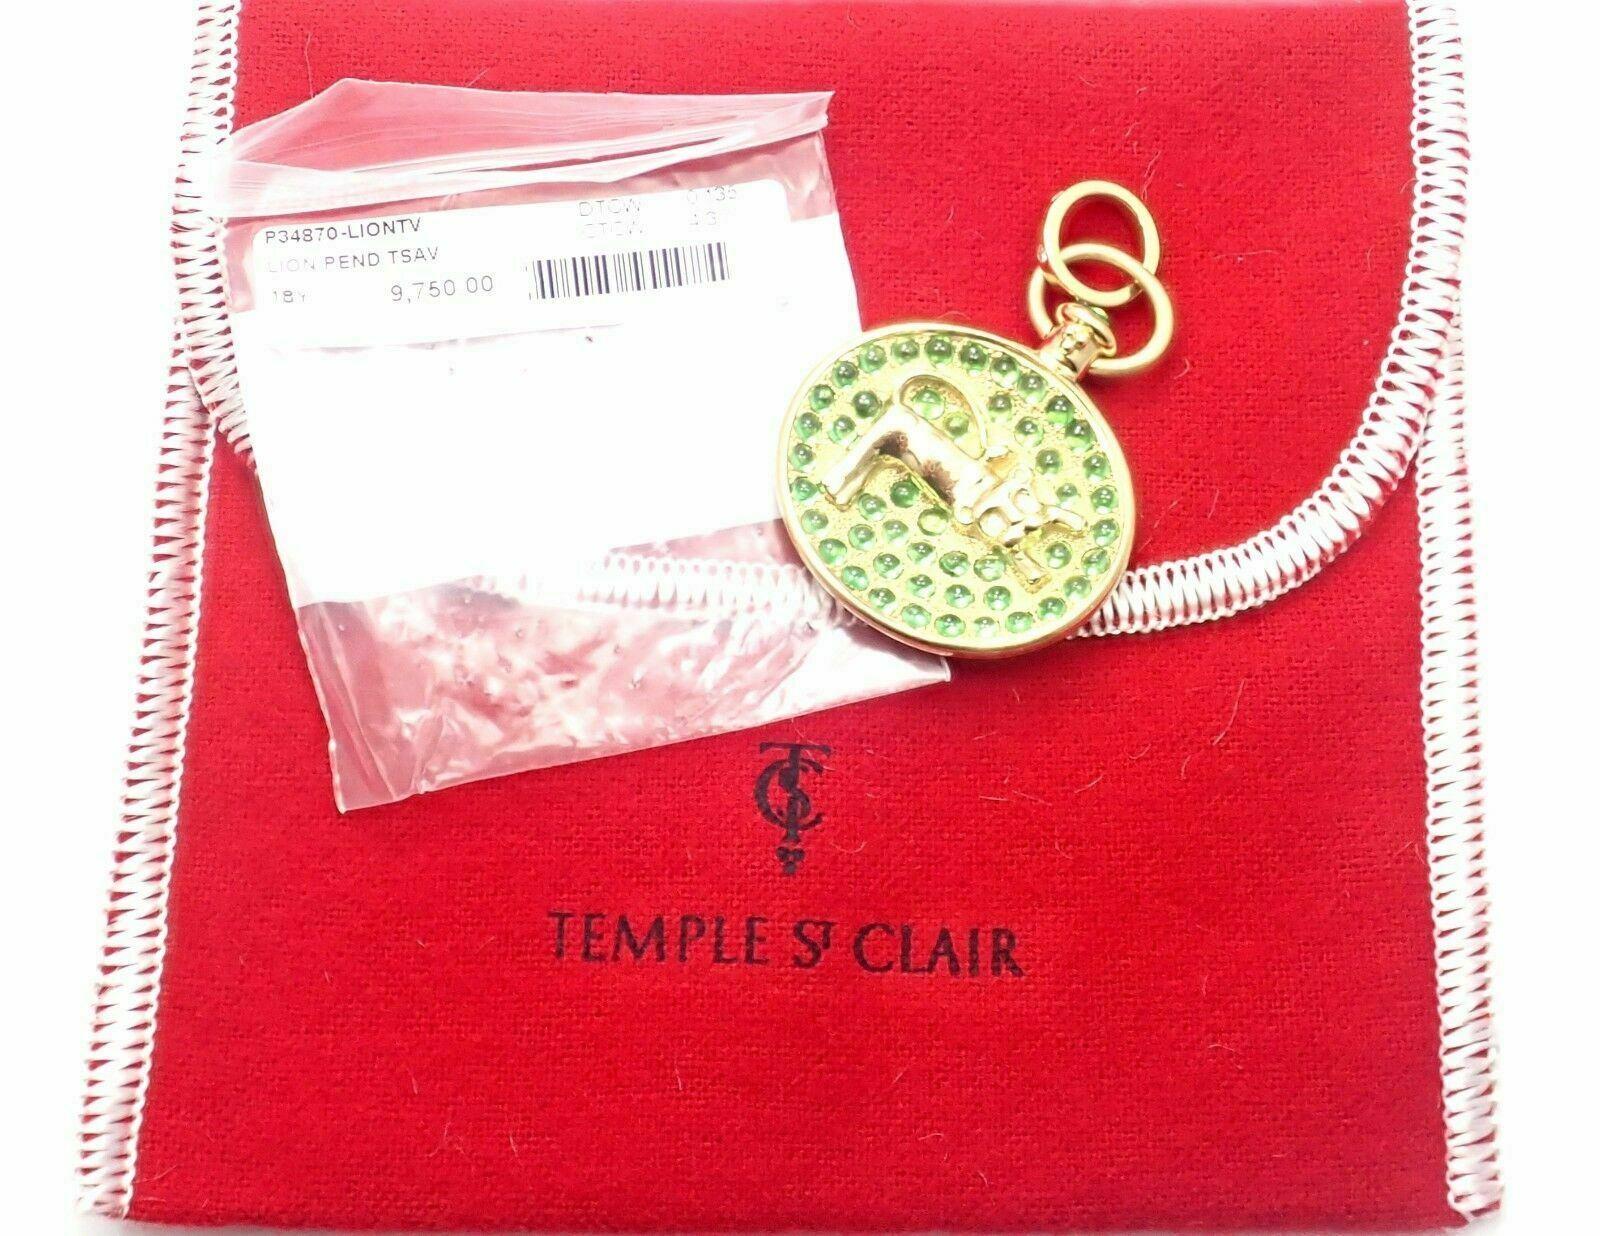 Temple St Clair Diamond Tsavorite Garnet Terrae Lion Yellow Gold Charm Pendant 2